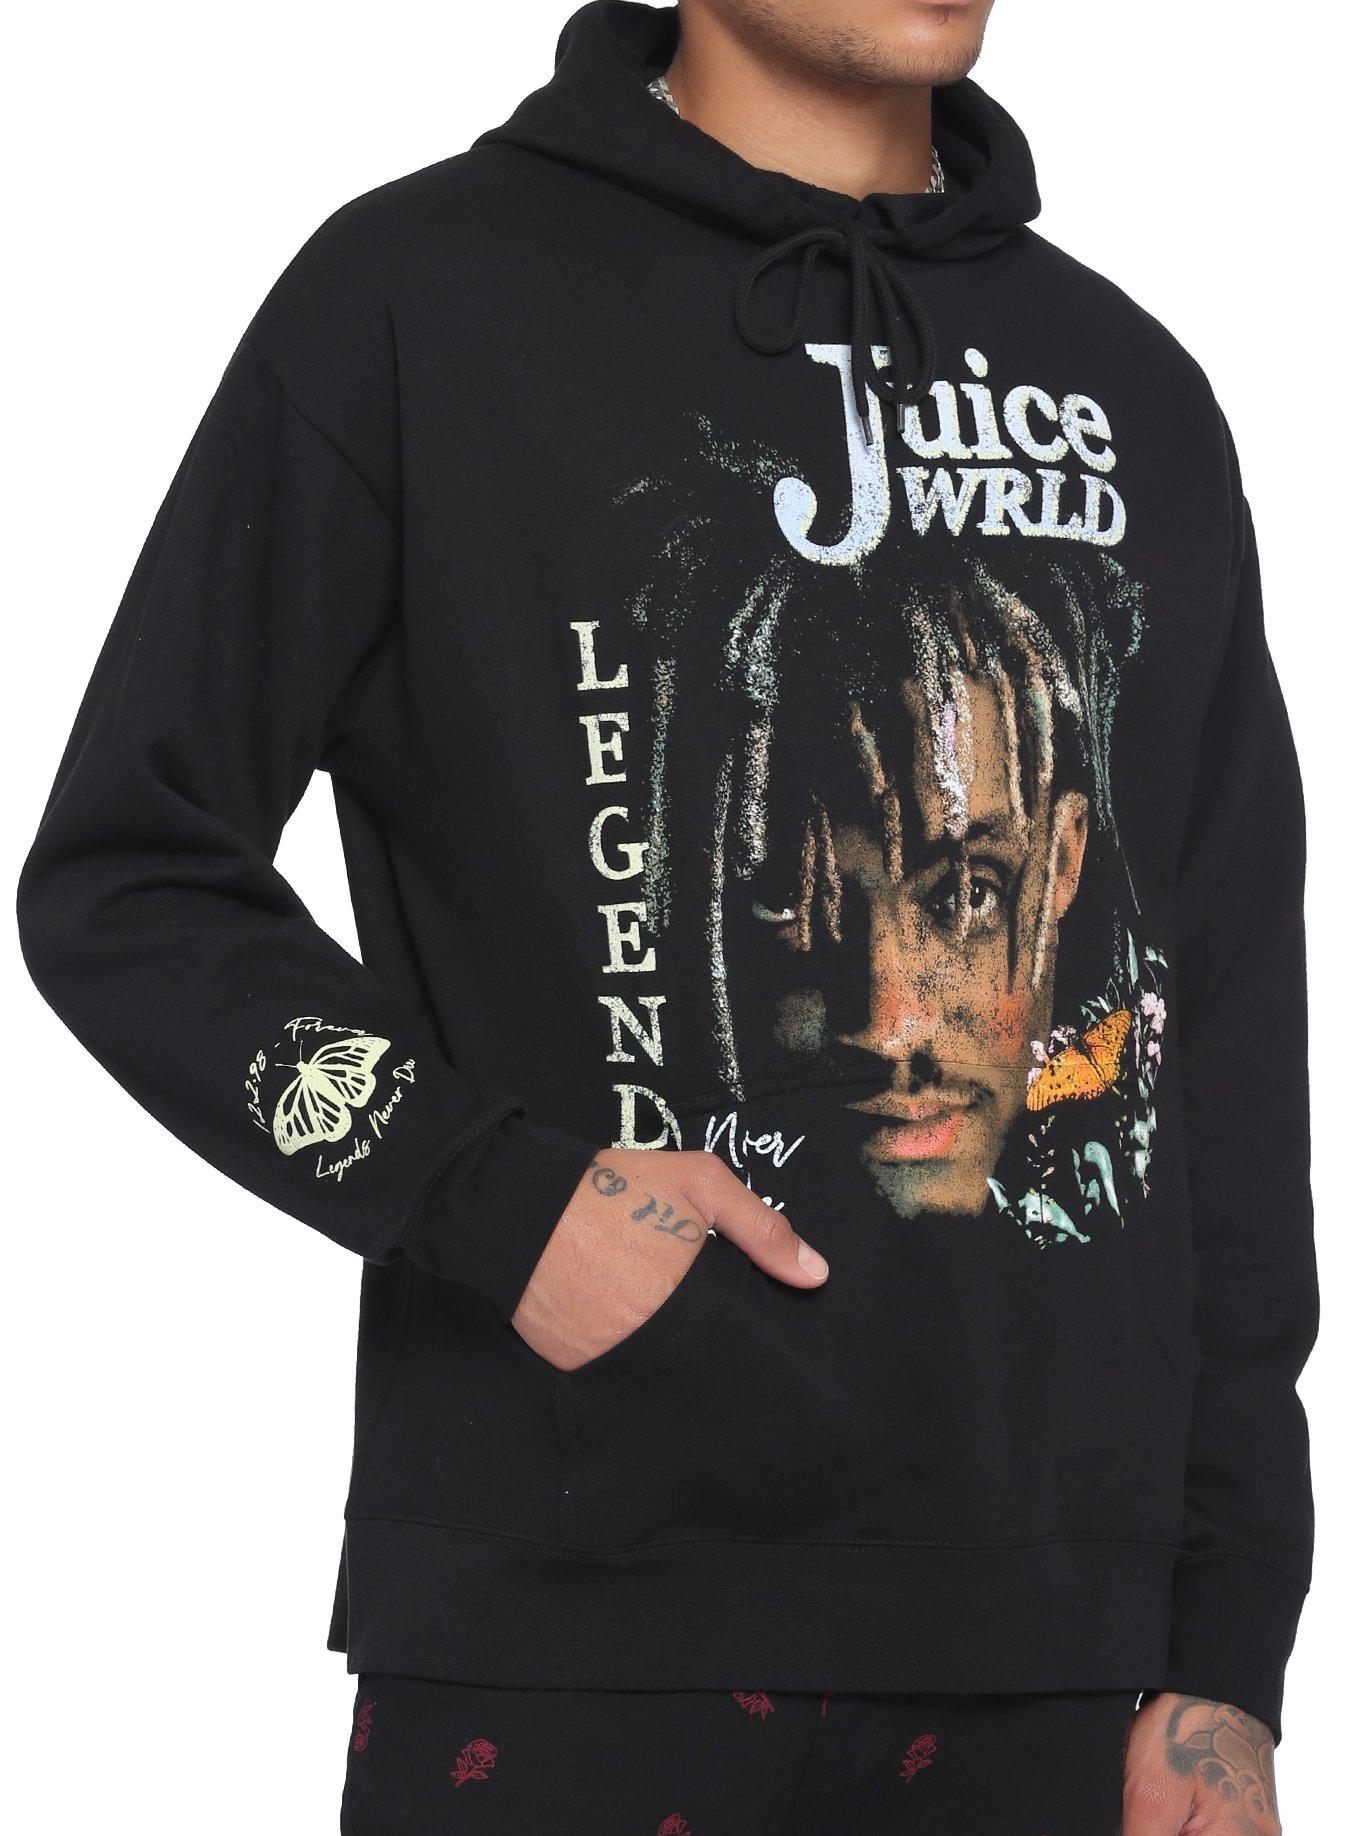 Buy Juice WRLD Merch - Hoodies, T-Shirts